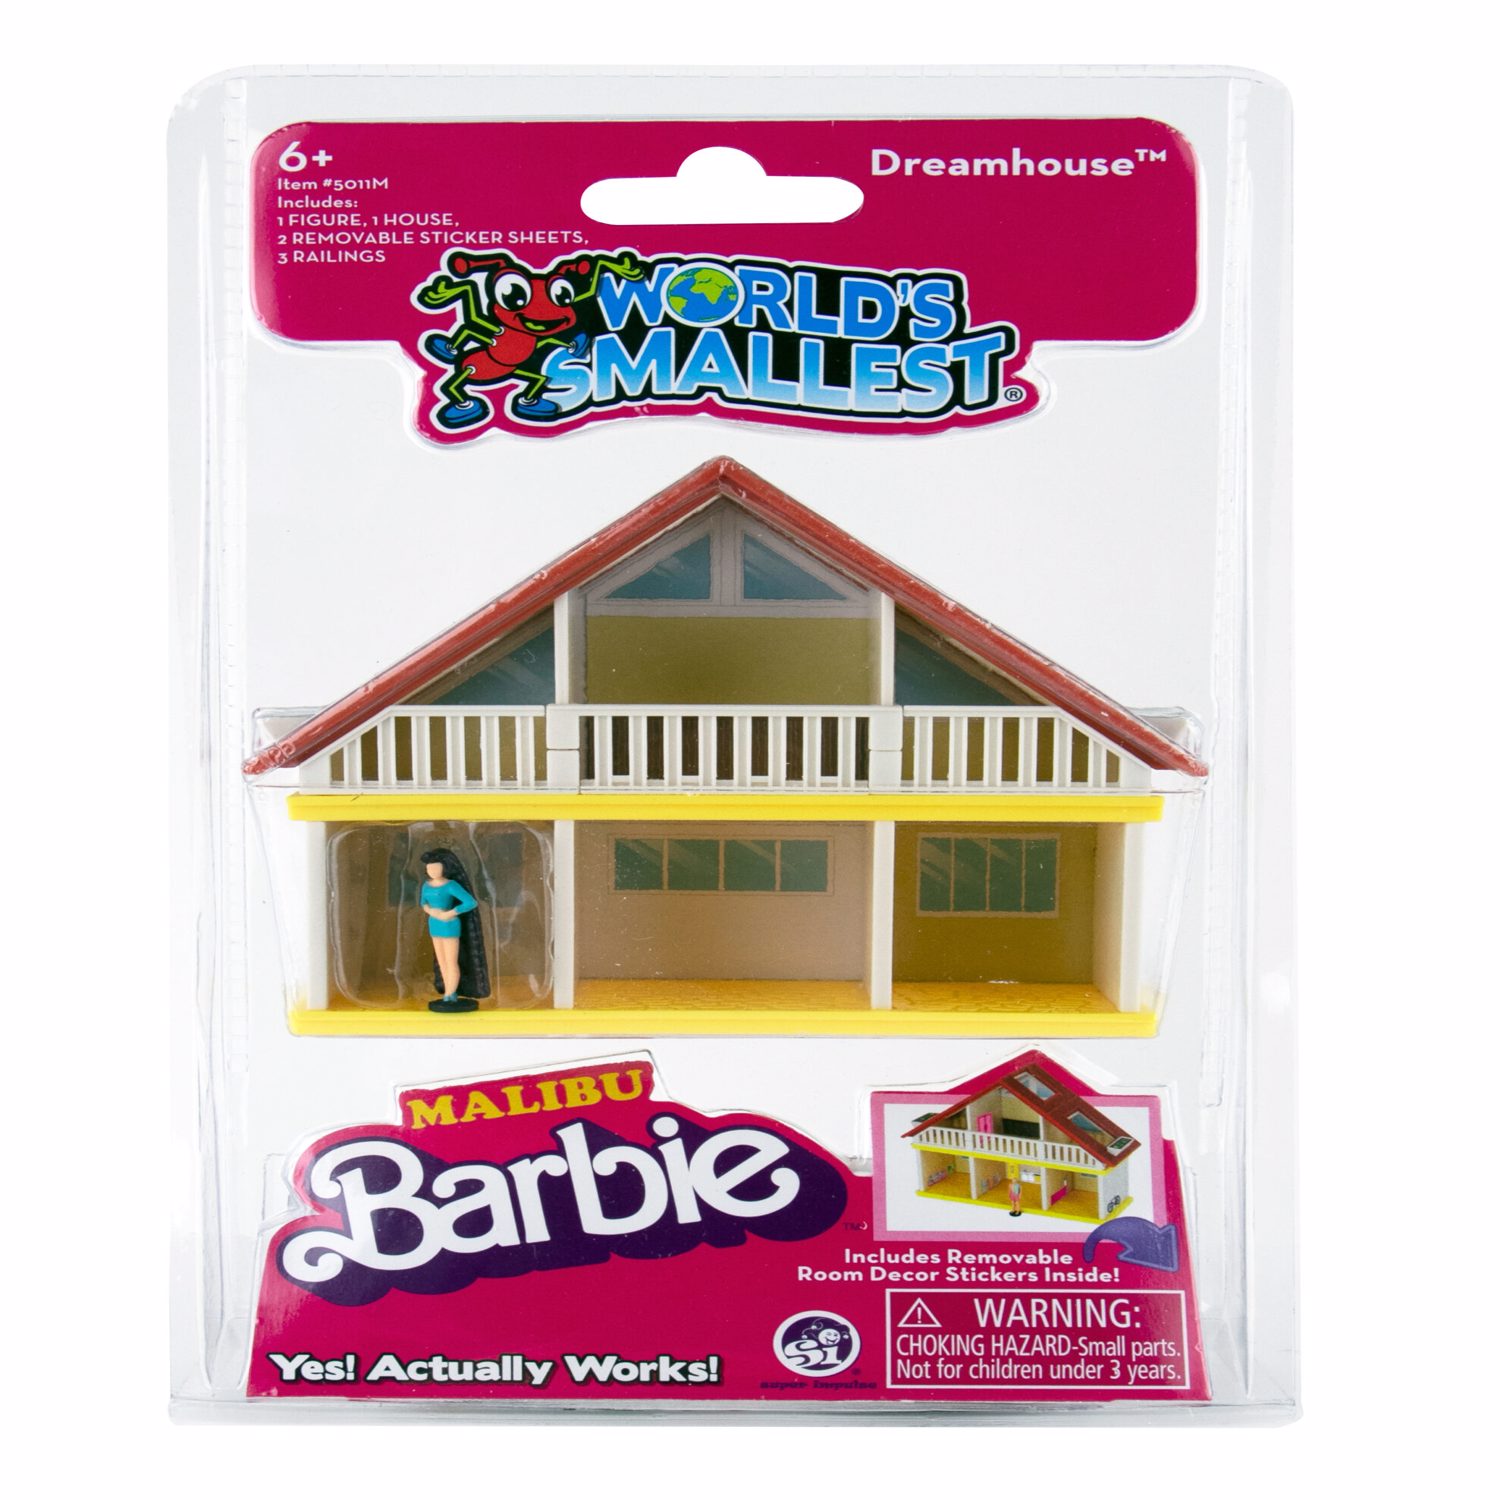 Photos - Other interior and decor World's Smallest Dreamhouse Malibu Barbie Multicolored 7 pc 5011M